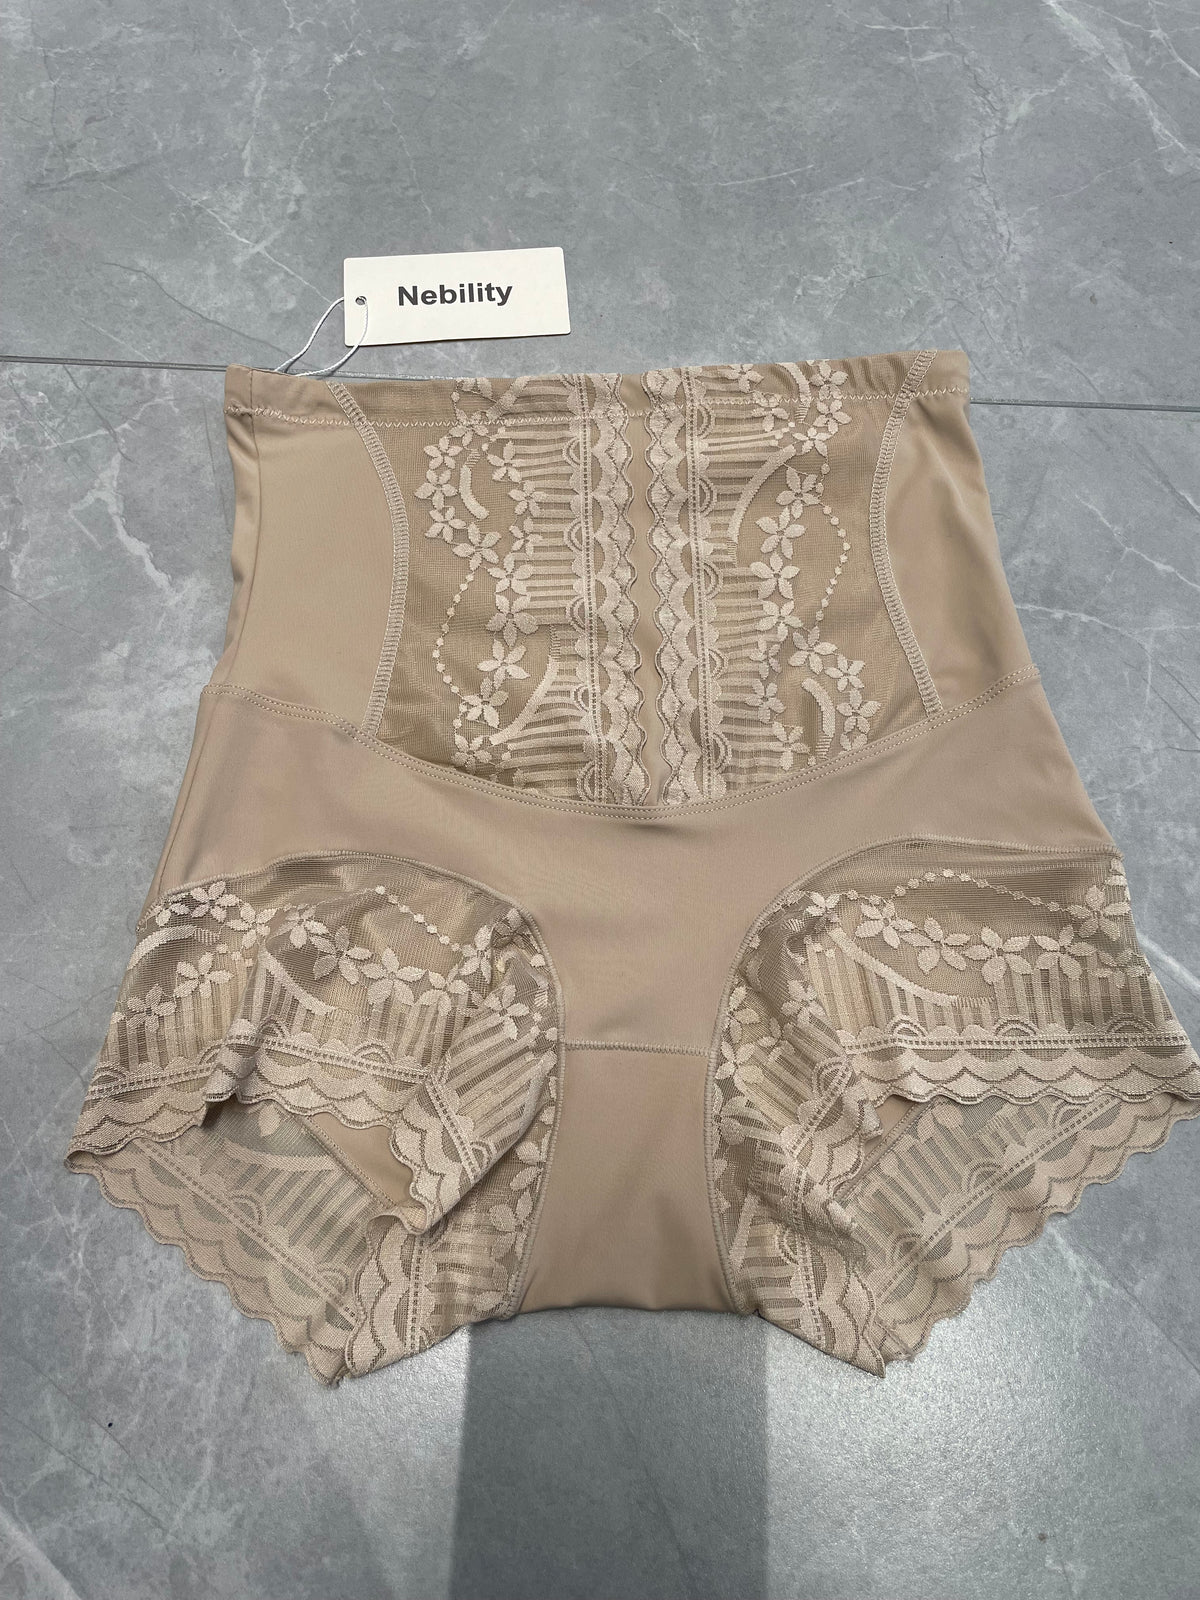 Nebility Women Lace Shorts High Waist Floral Lace Patchwork Panty Shorts Stretchy Lingerie Underwear